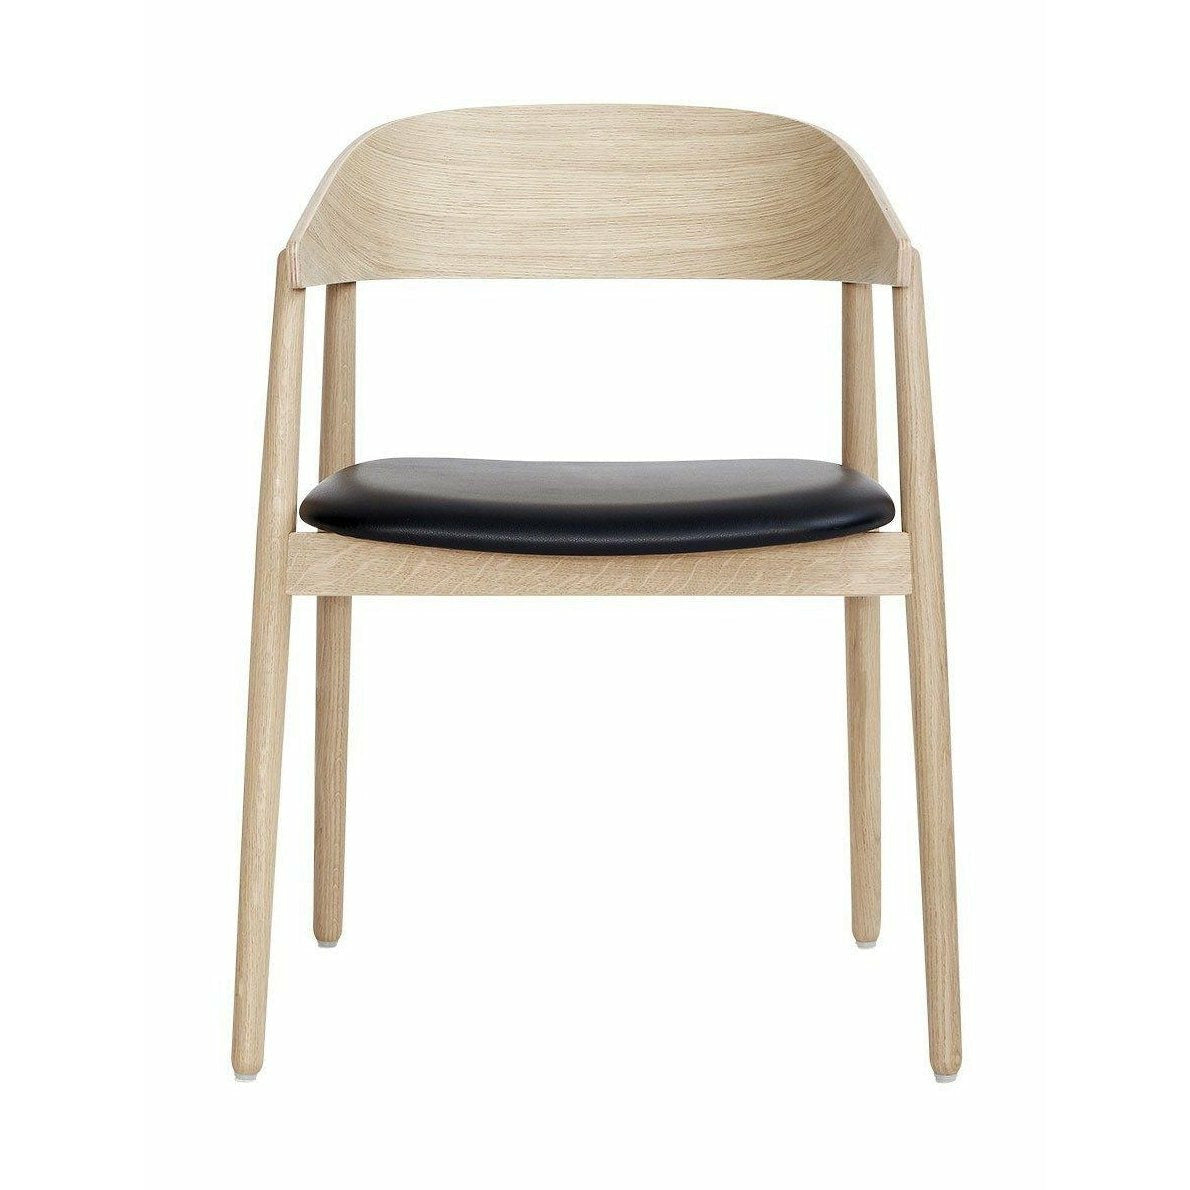 Andersen Furniture AC2 sedia in quercia laccata pigmentata, in pelle nera